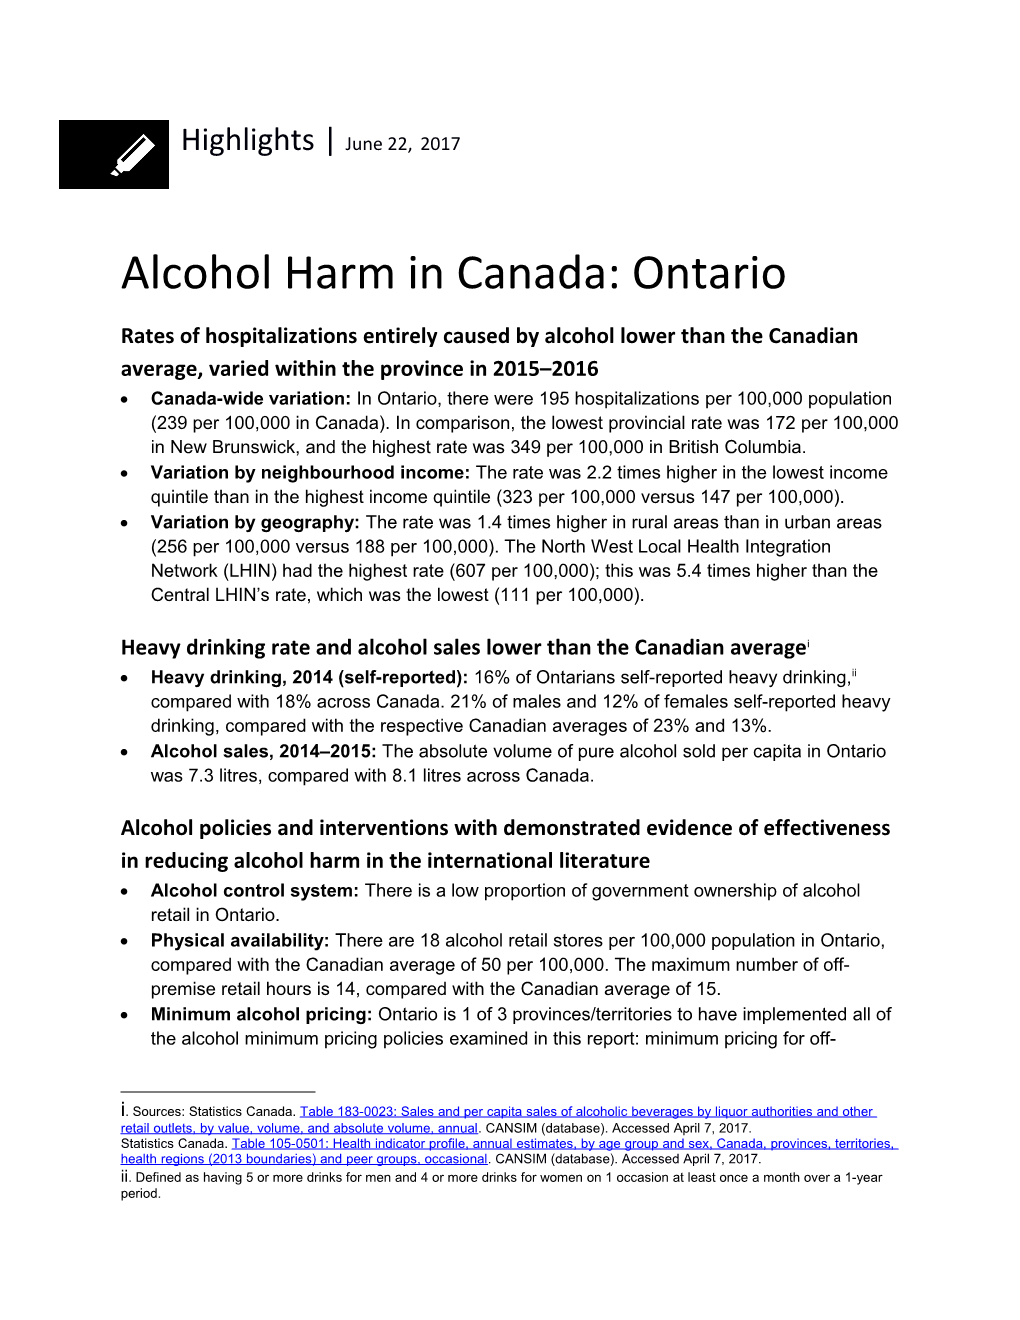 Alcohol Harm in Canada: Ontario